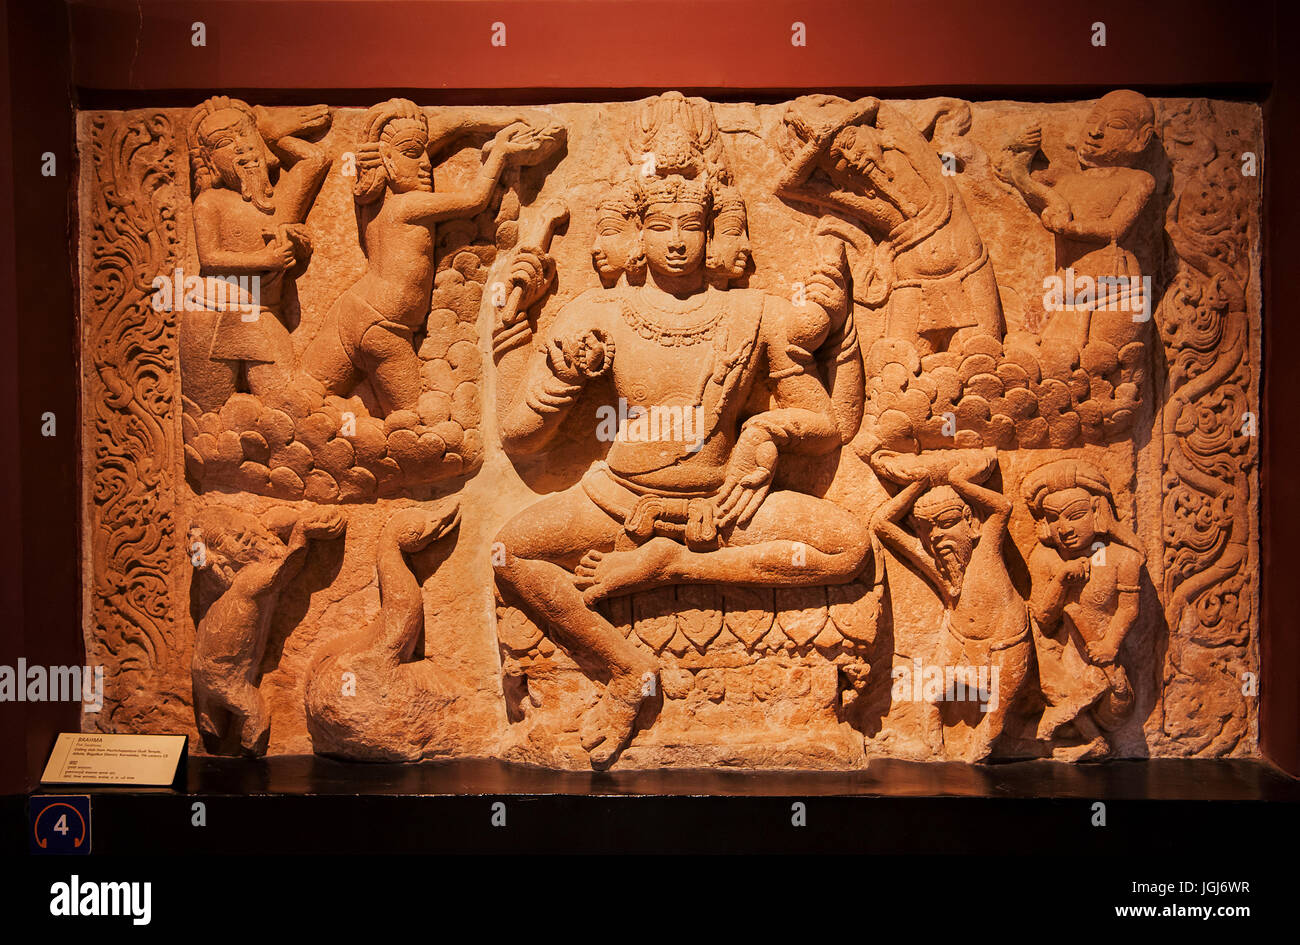 The image of Sculpture in Chatrapati Shivaji Maharaj Vastu Sangrahalaya. Prince Of Wales Museum Of Western India. Mumbai. India. Stock Photo